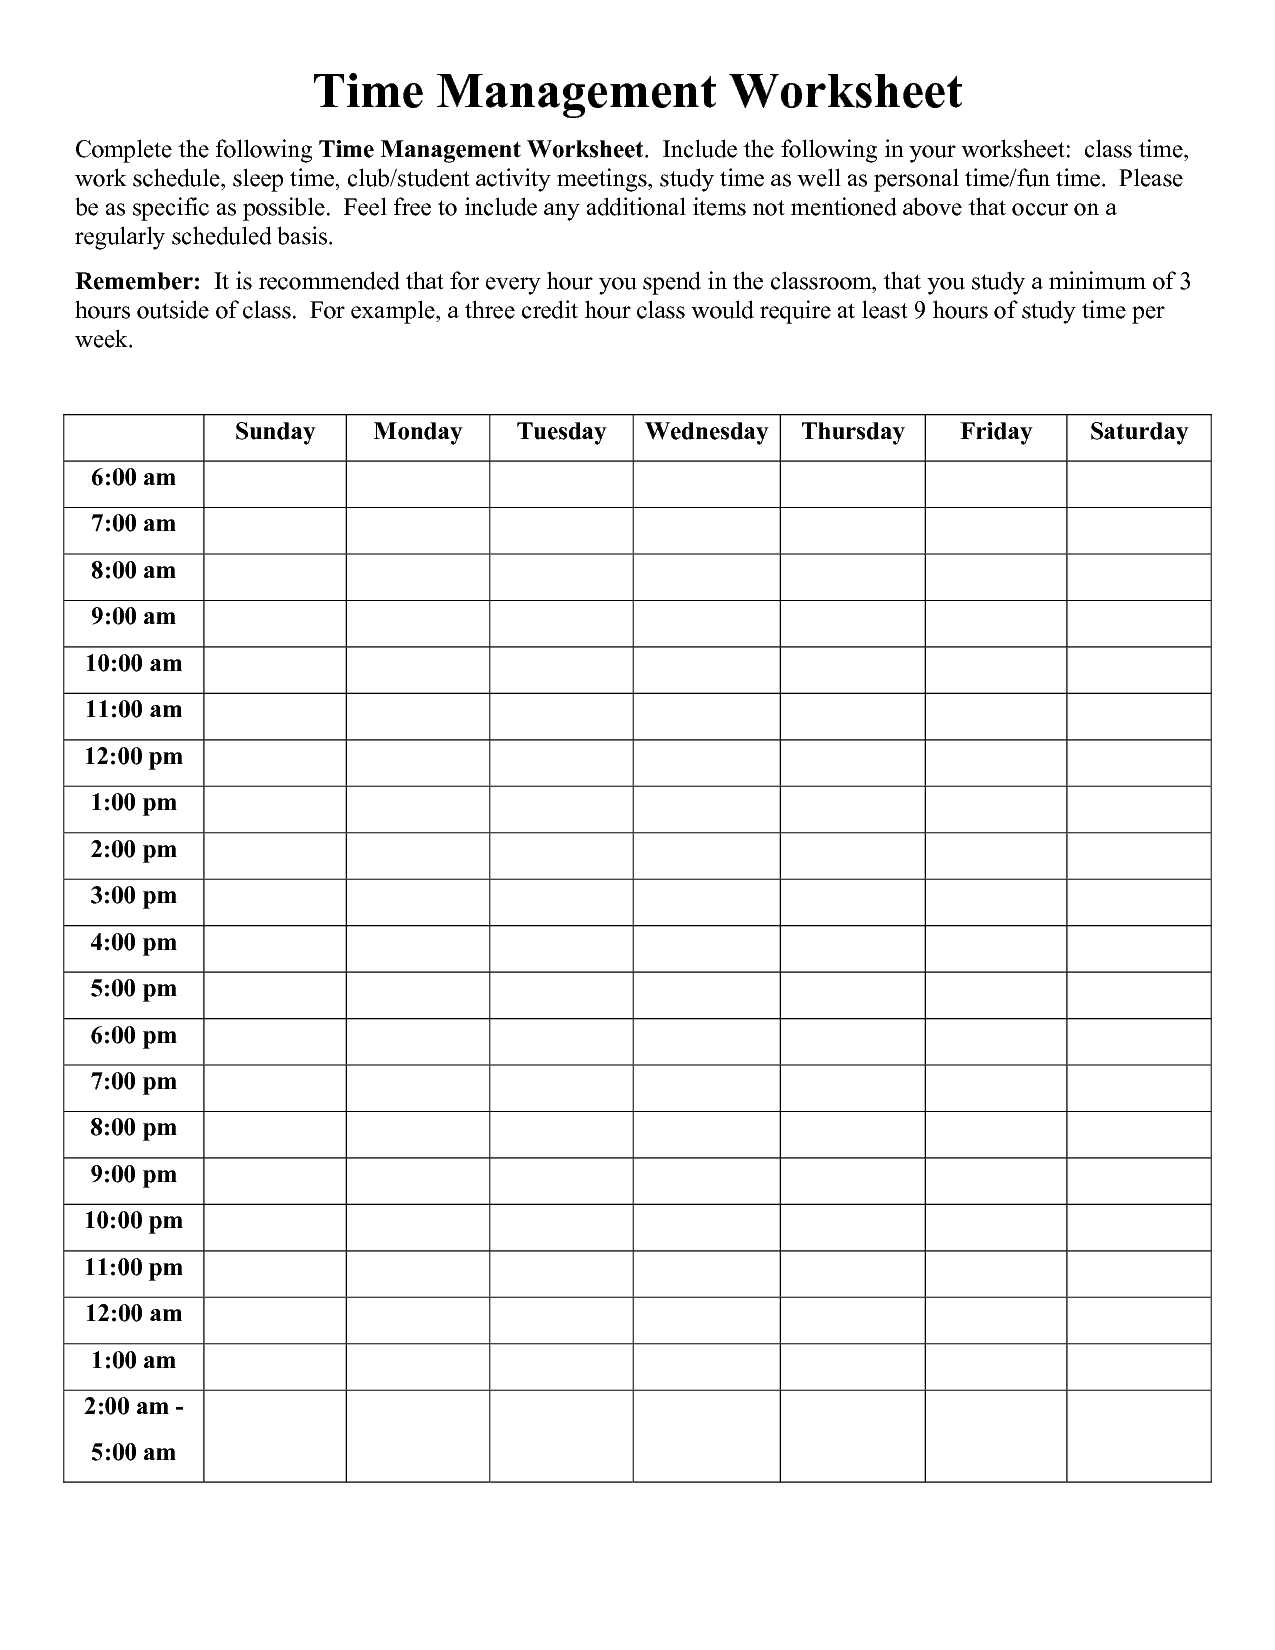 Stress Management Worksheets Pdf Along with Time Study Worksheet